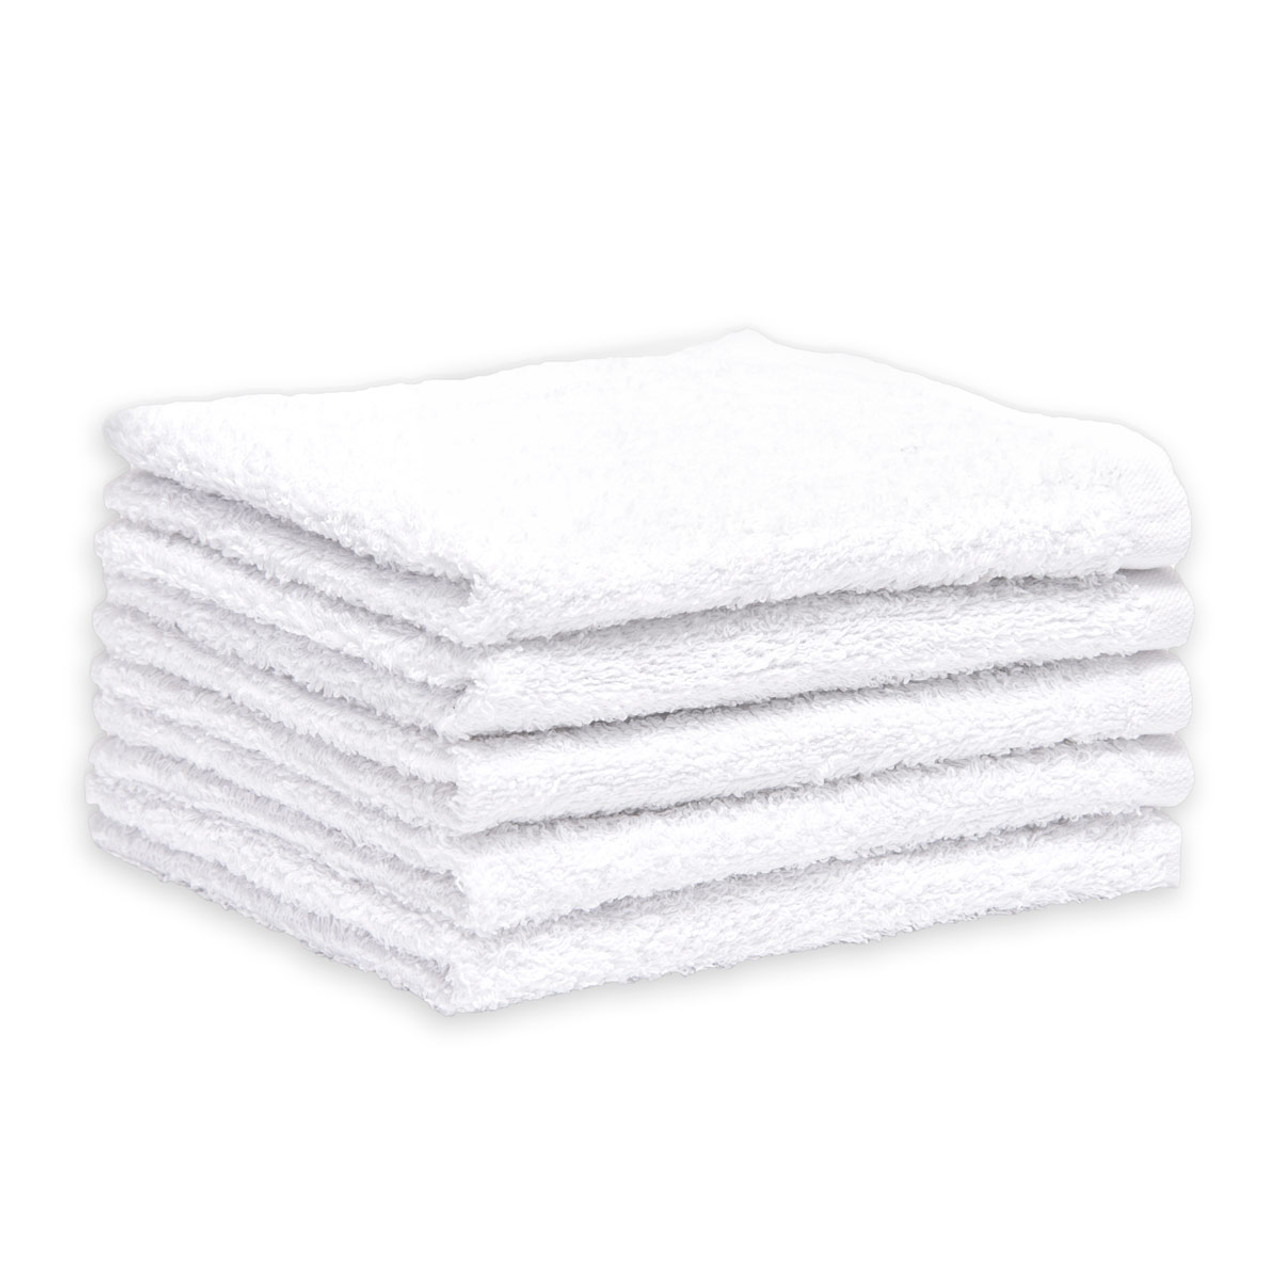 Choice 16 x 19 White 24 oz. Cotton Textured Terry Bar Towel - 12